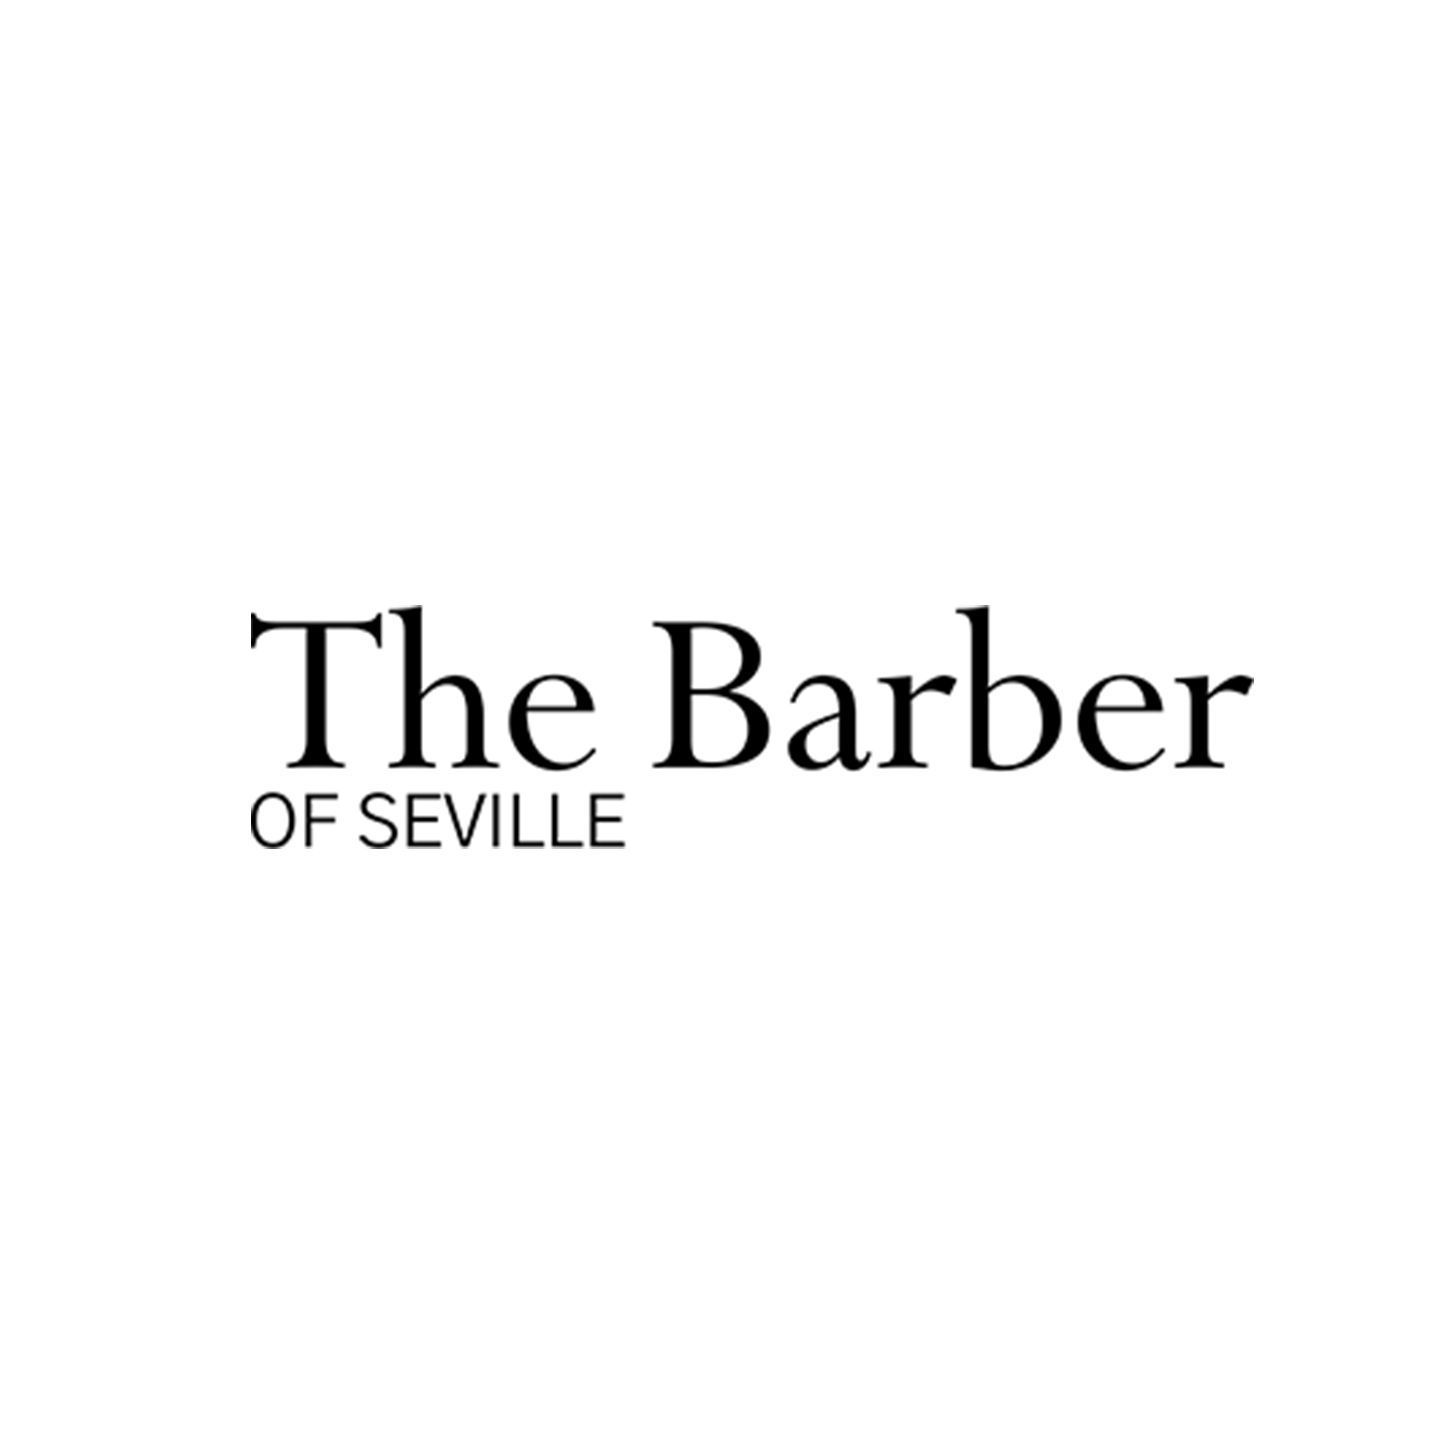 The Barber of Seville, 11844 Fair Oaks Mall, l100, Fairfax, 22033